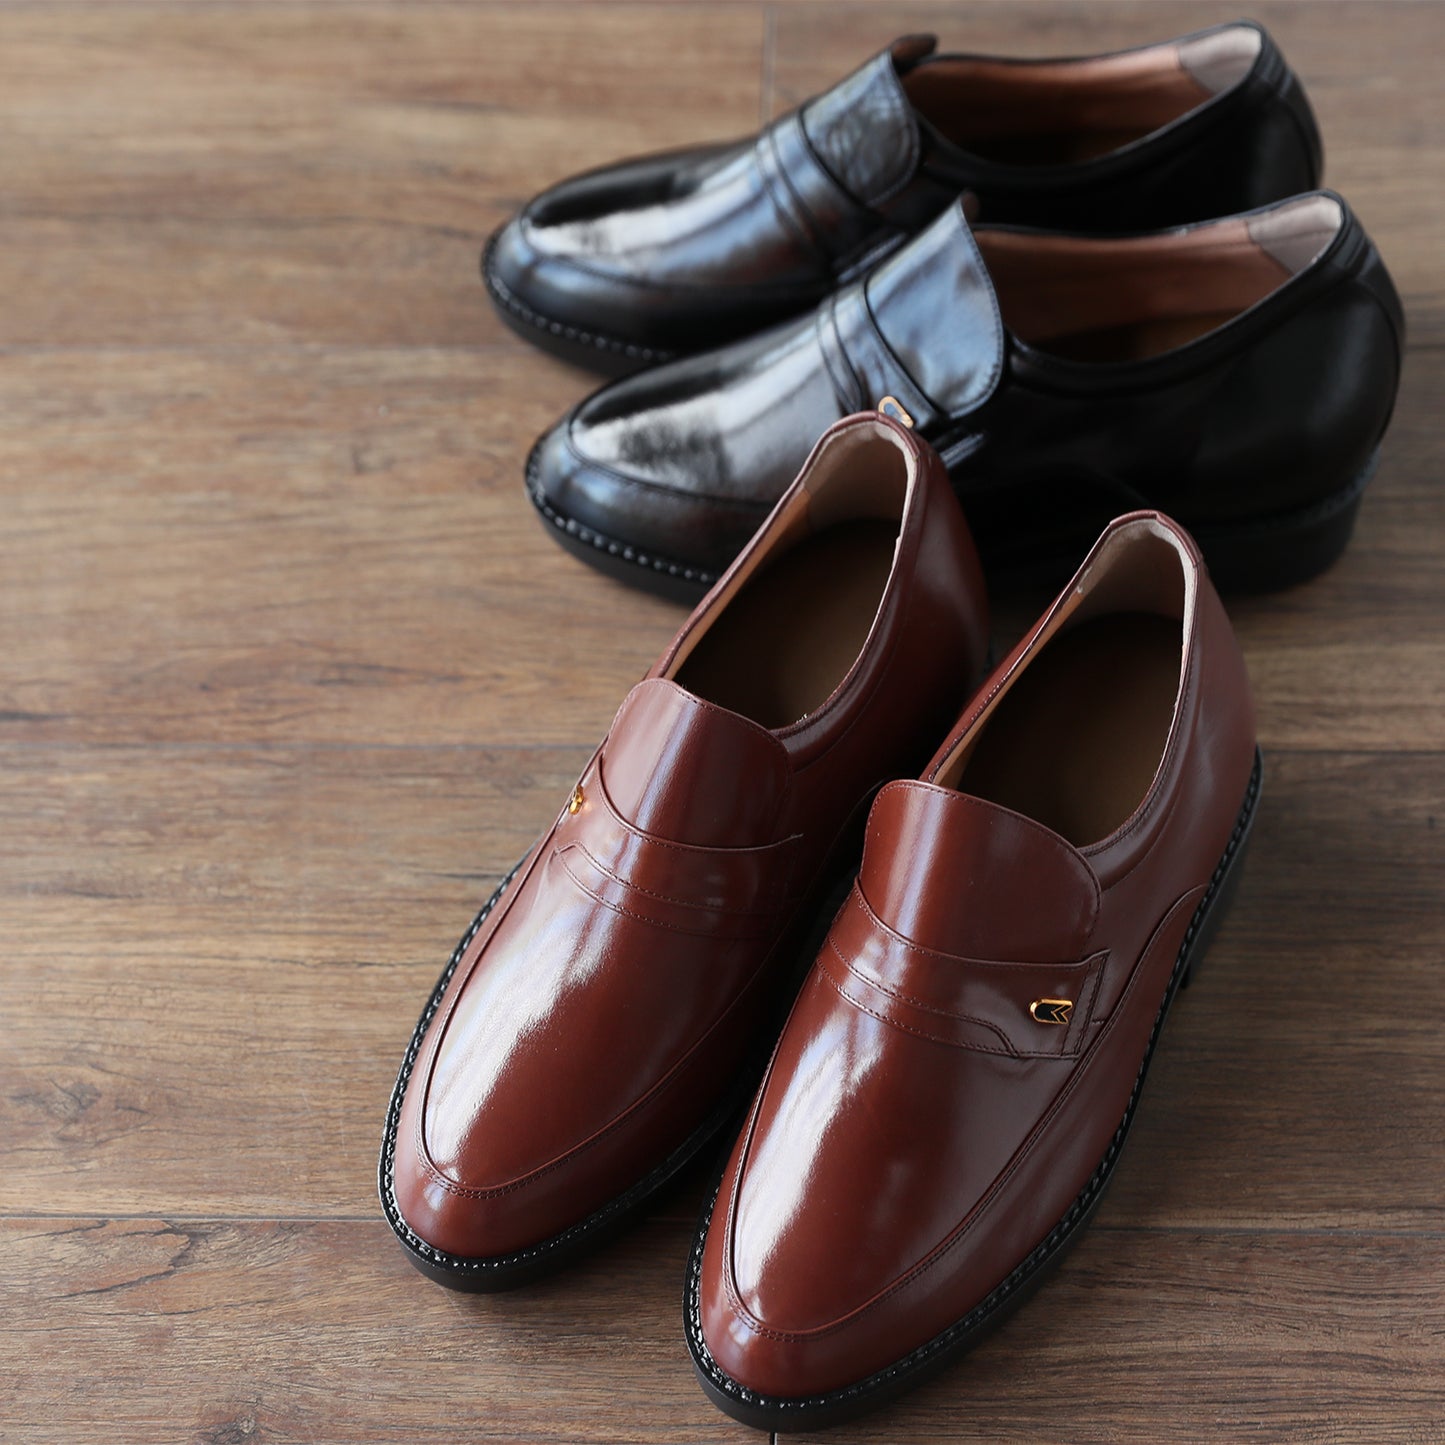 Men's Elevator Shoes Height Increasing 2.76" Taller Slip on U-tip Dress Shoes Kangaroo Leather No. 234